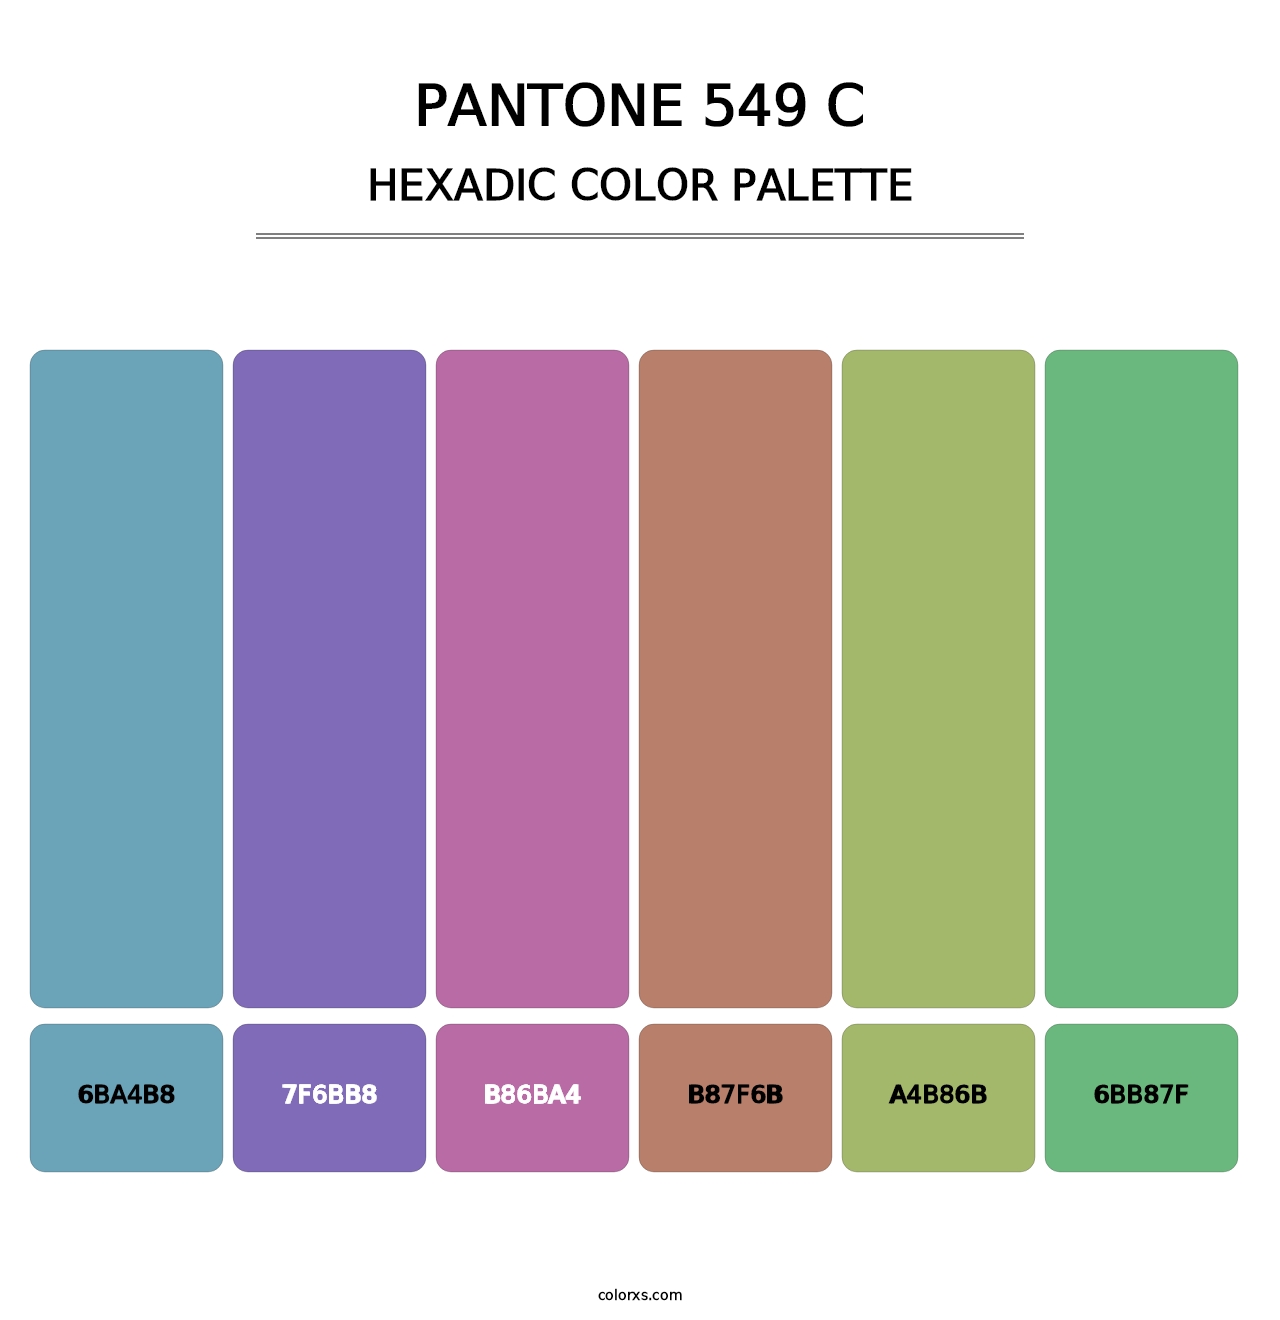 PANTONE 549 C - Hexadic Color Palette